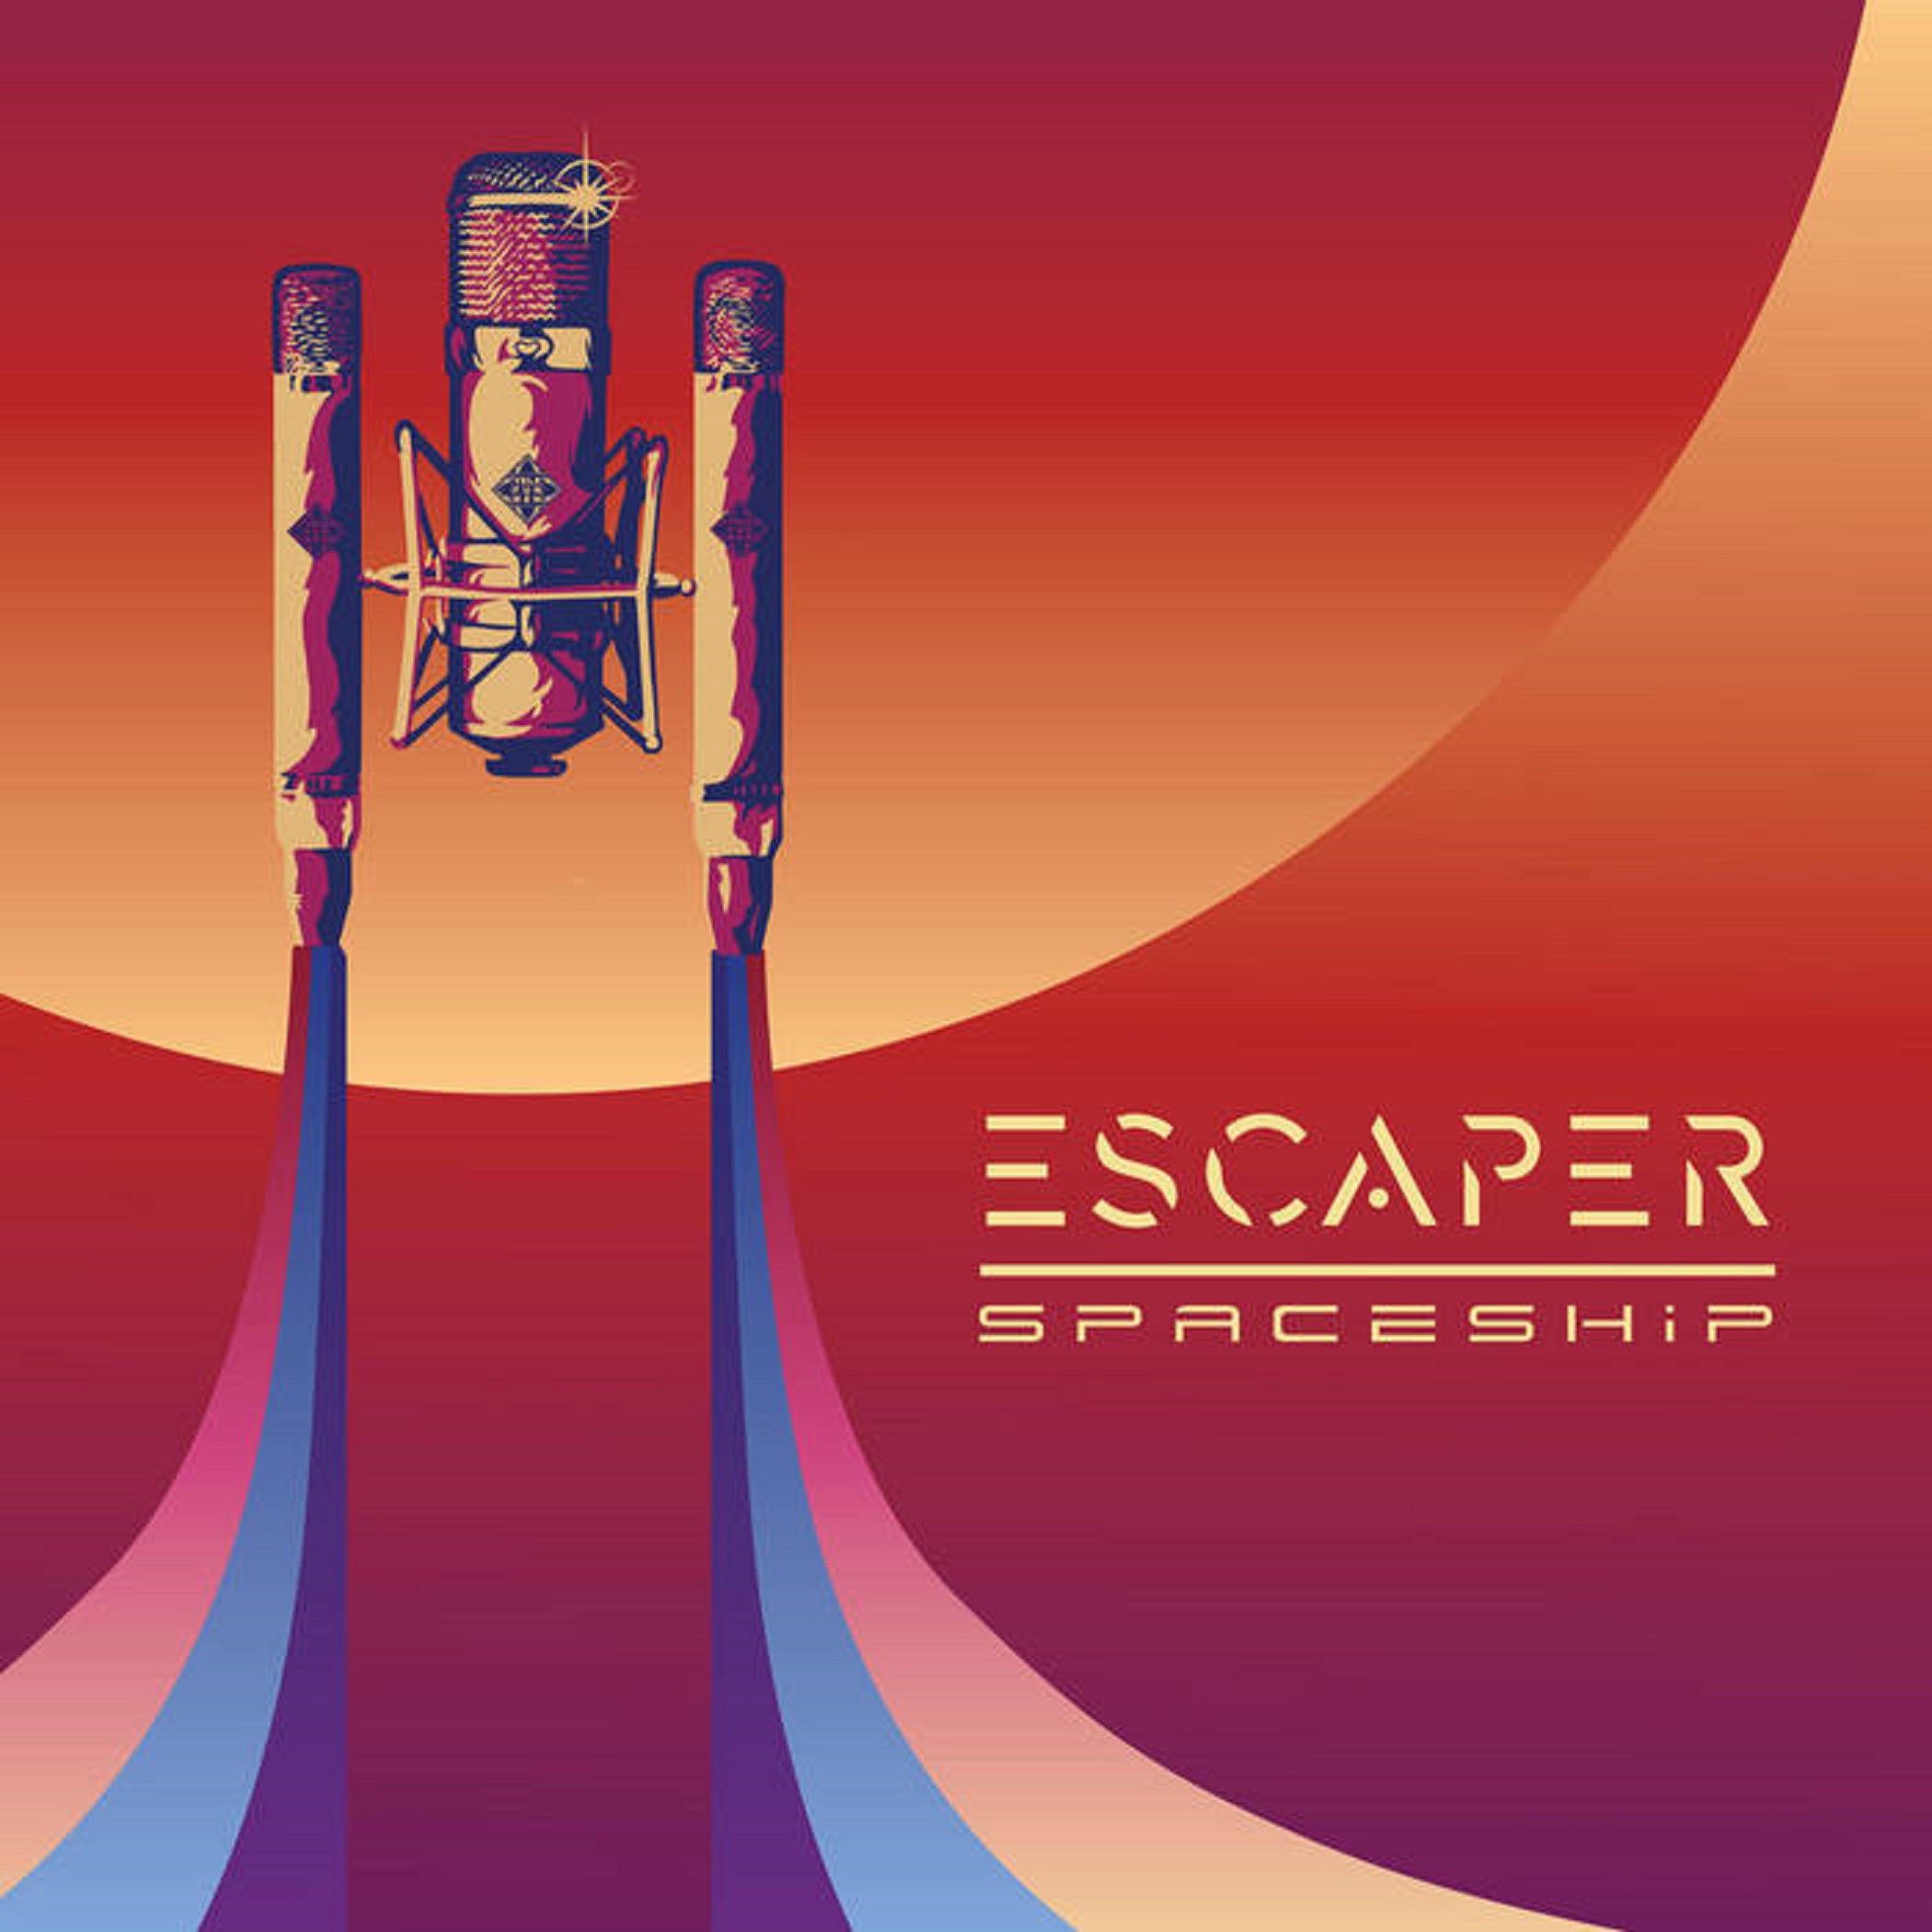 ESCAPER BLASTS OFF WITH NEW ALBUM, SPACESHIP